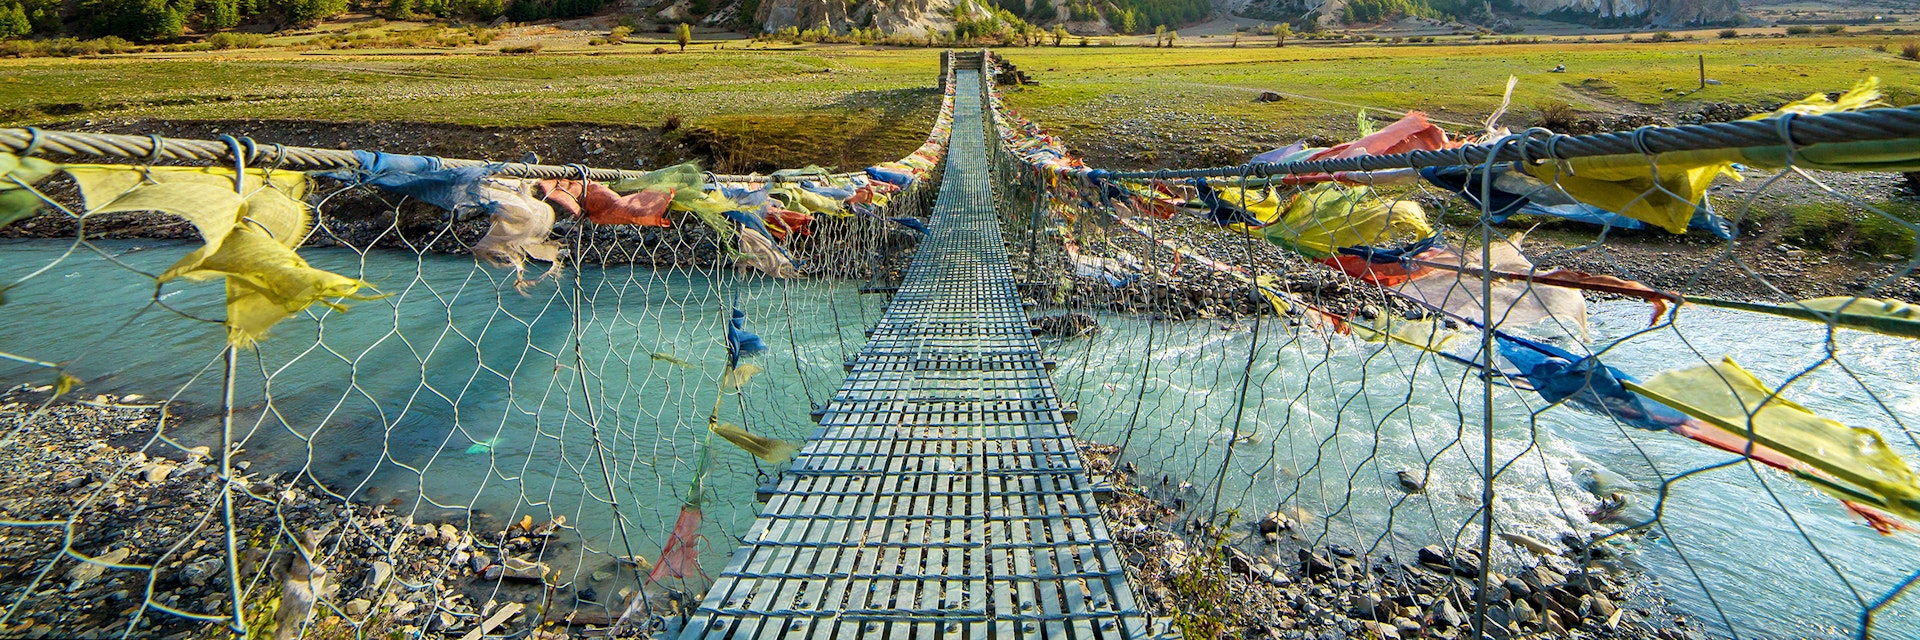 Suspension bridge with buddhist prayer flags on the Annapurna circuit trek in Nepal.